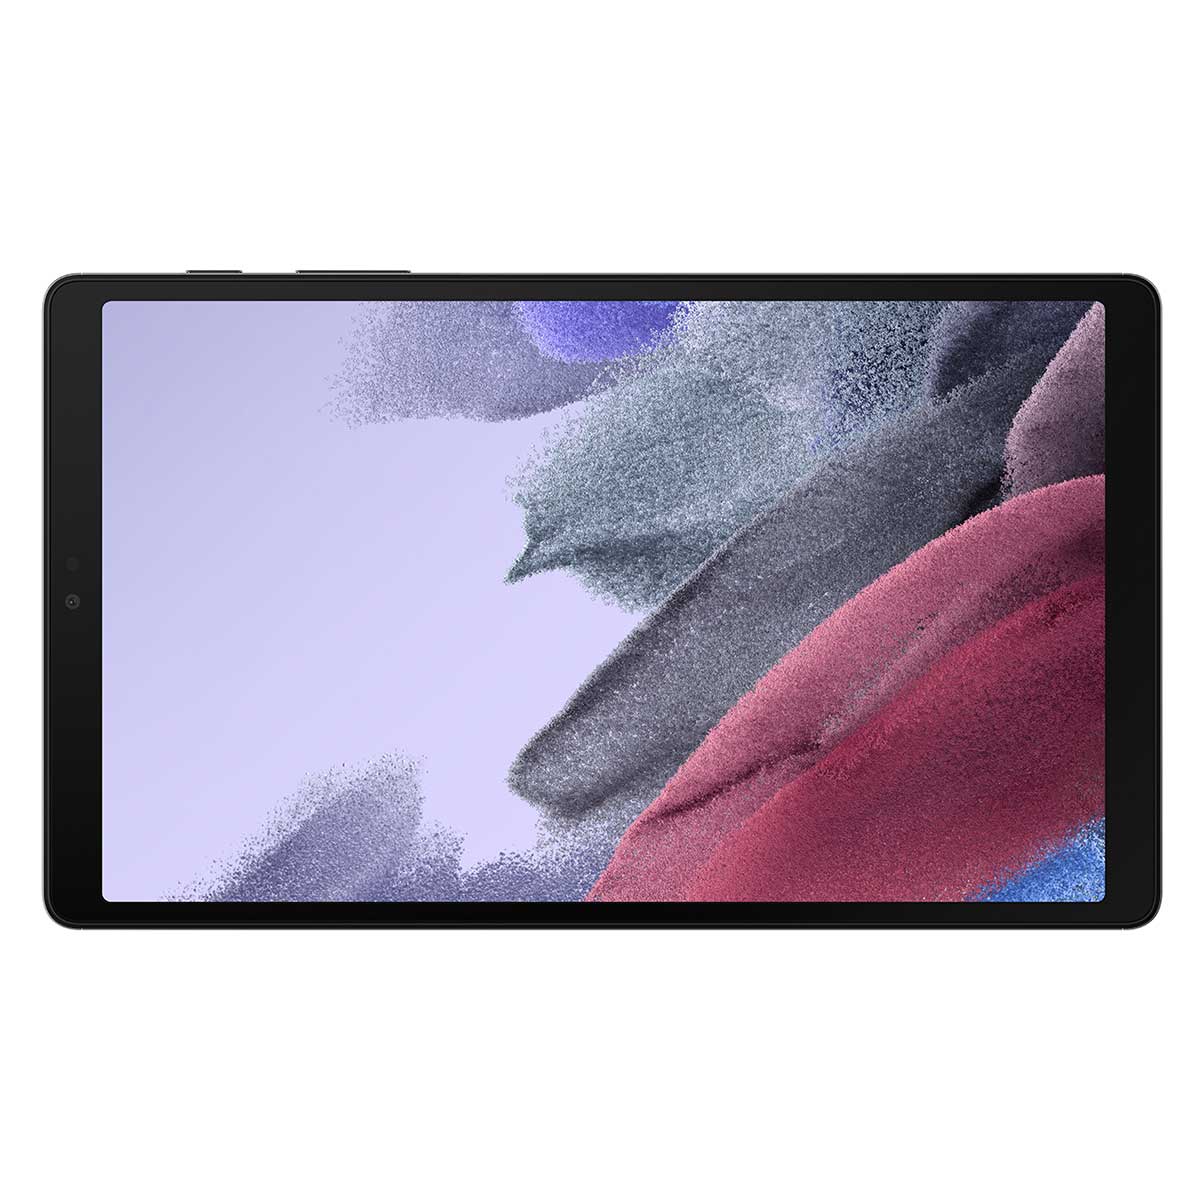 tablet-samsung-t225-a7-lite-64gb-grft-4g-5.jpg